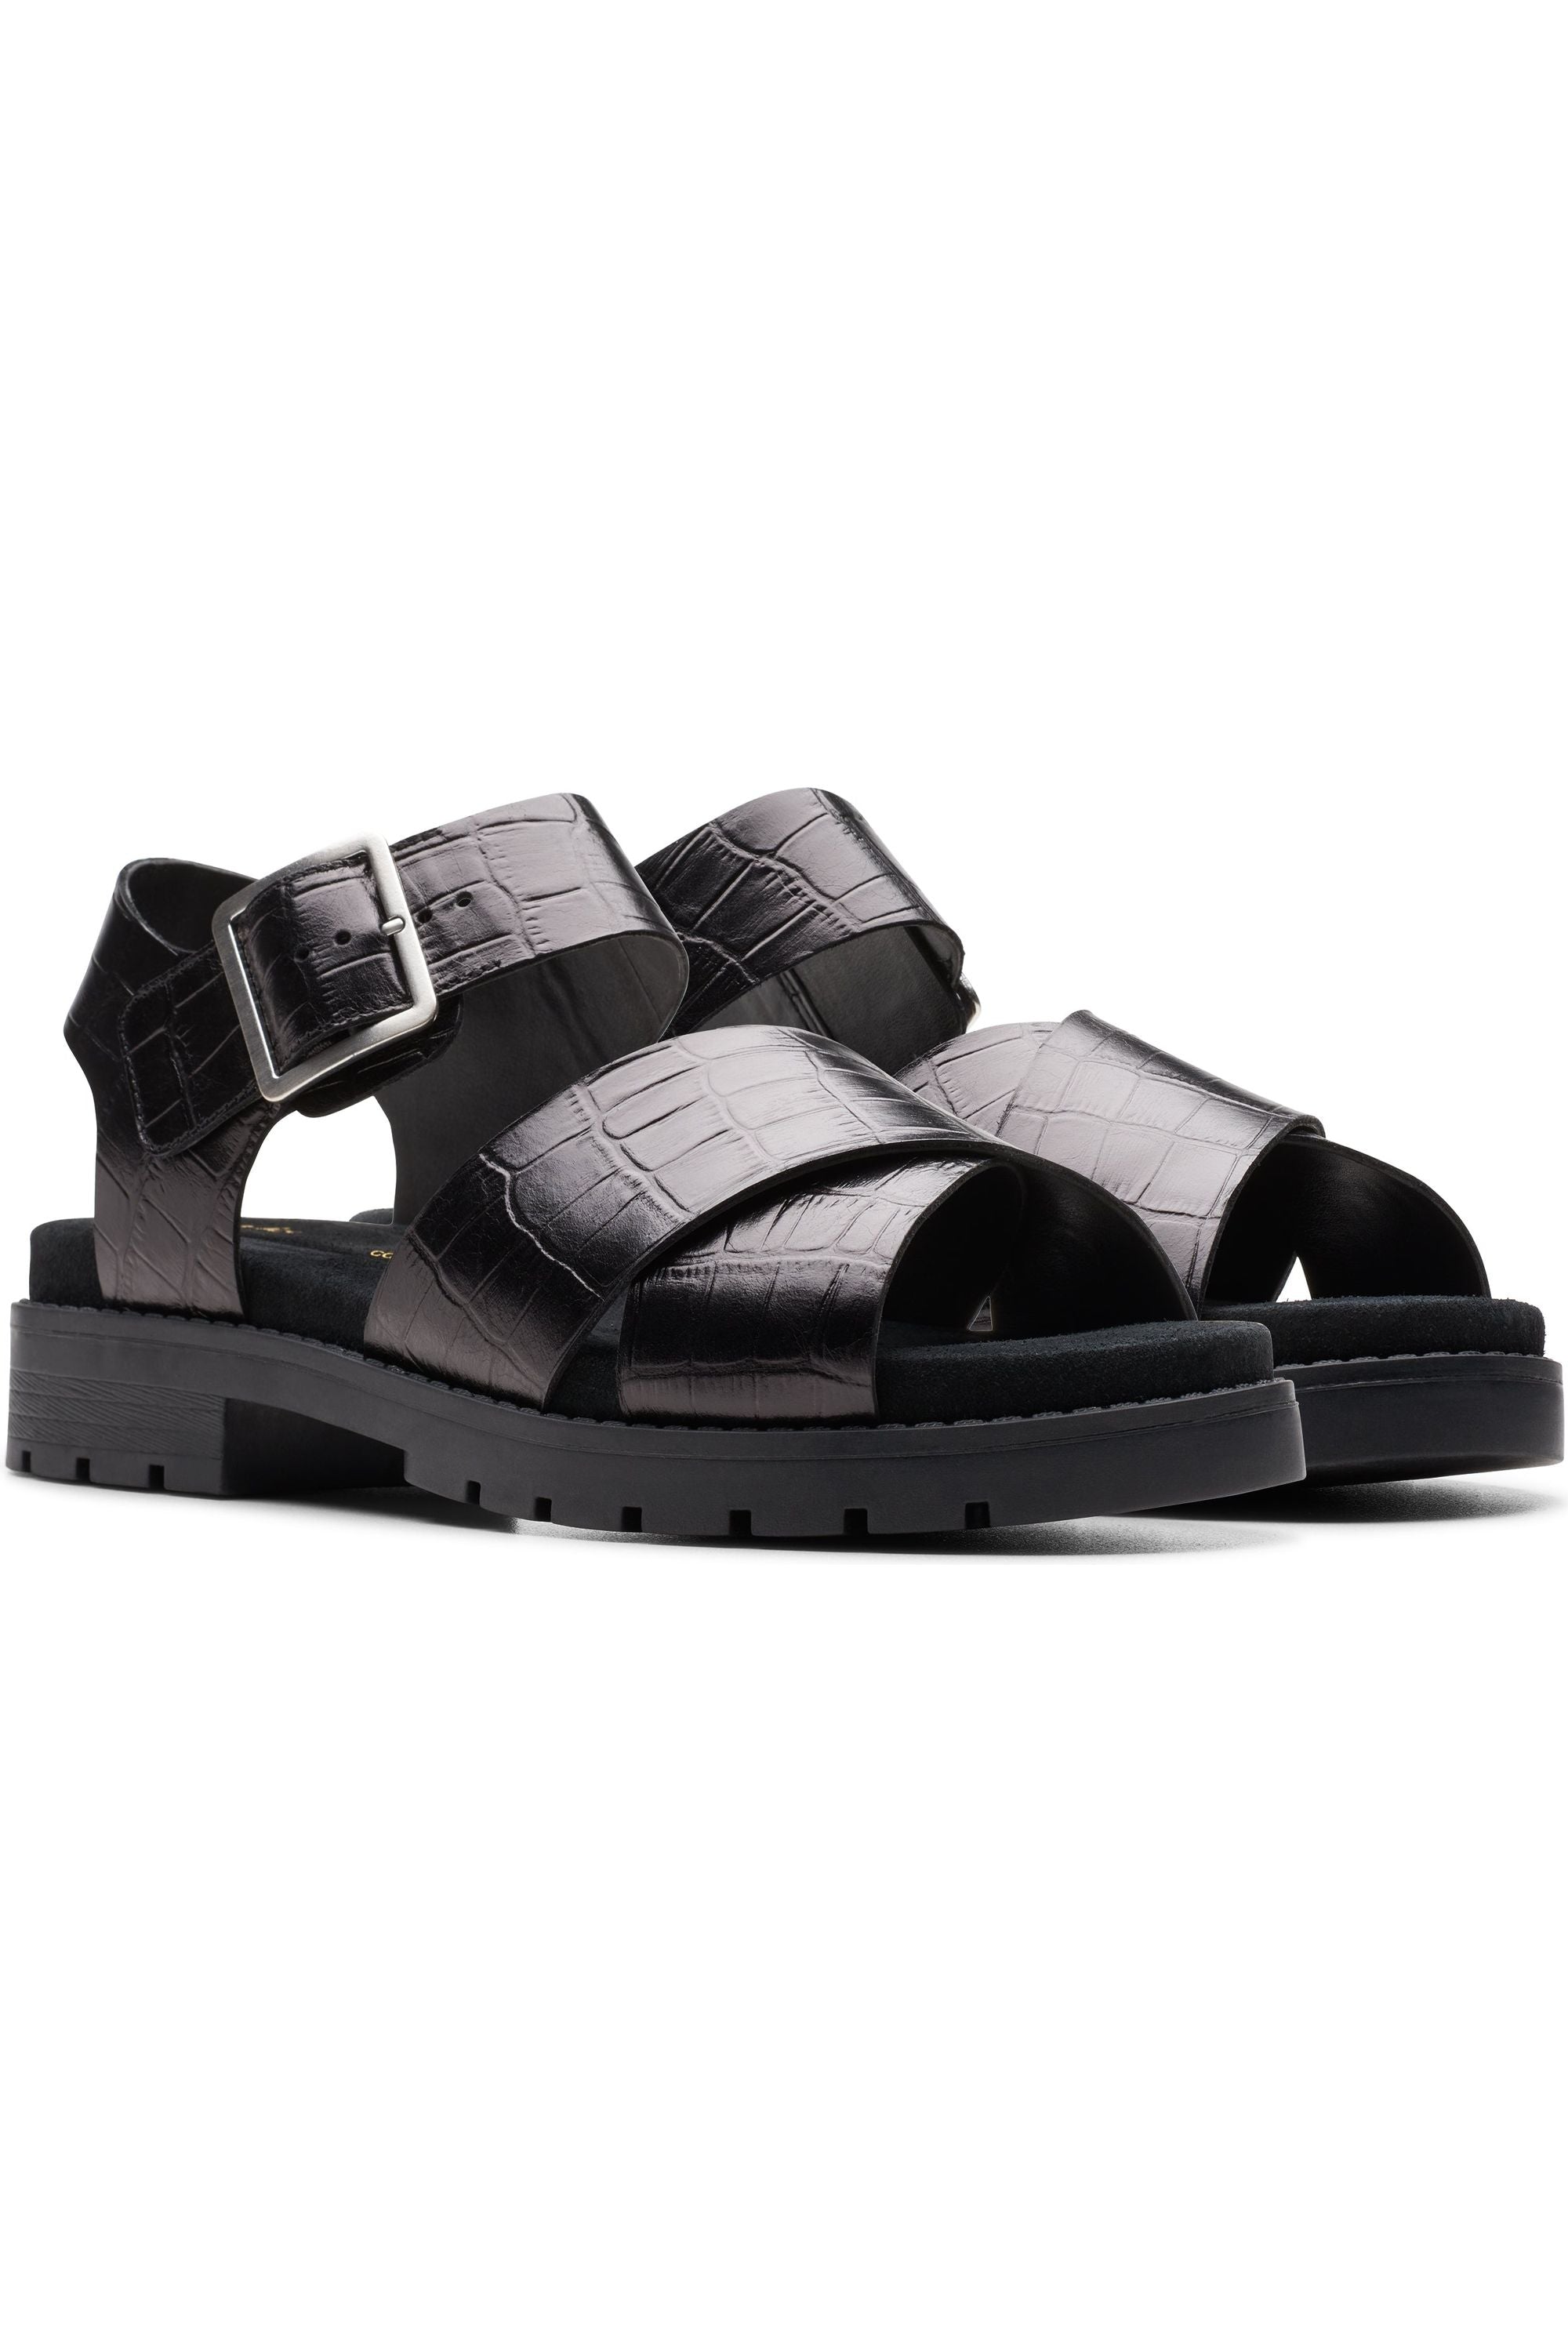 Clarks Orinoco Cross black Interest sandal